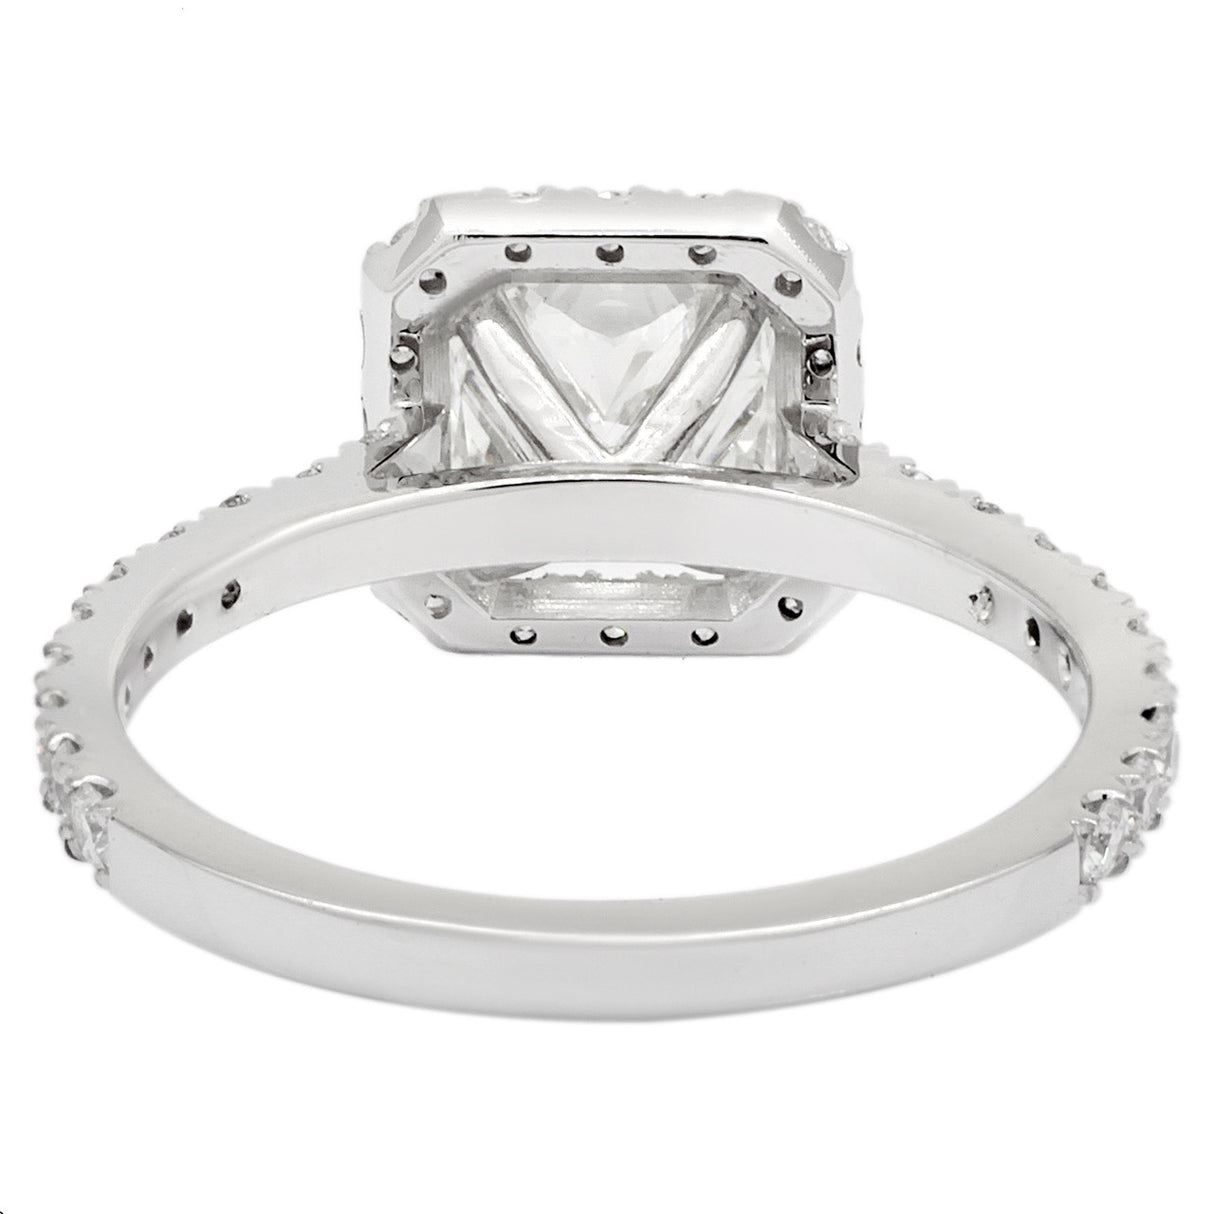 18K White Gold 1.18 Carat Radiant Cut Diamond Ring